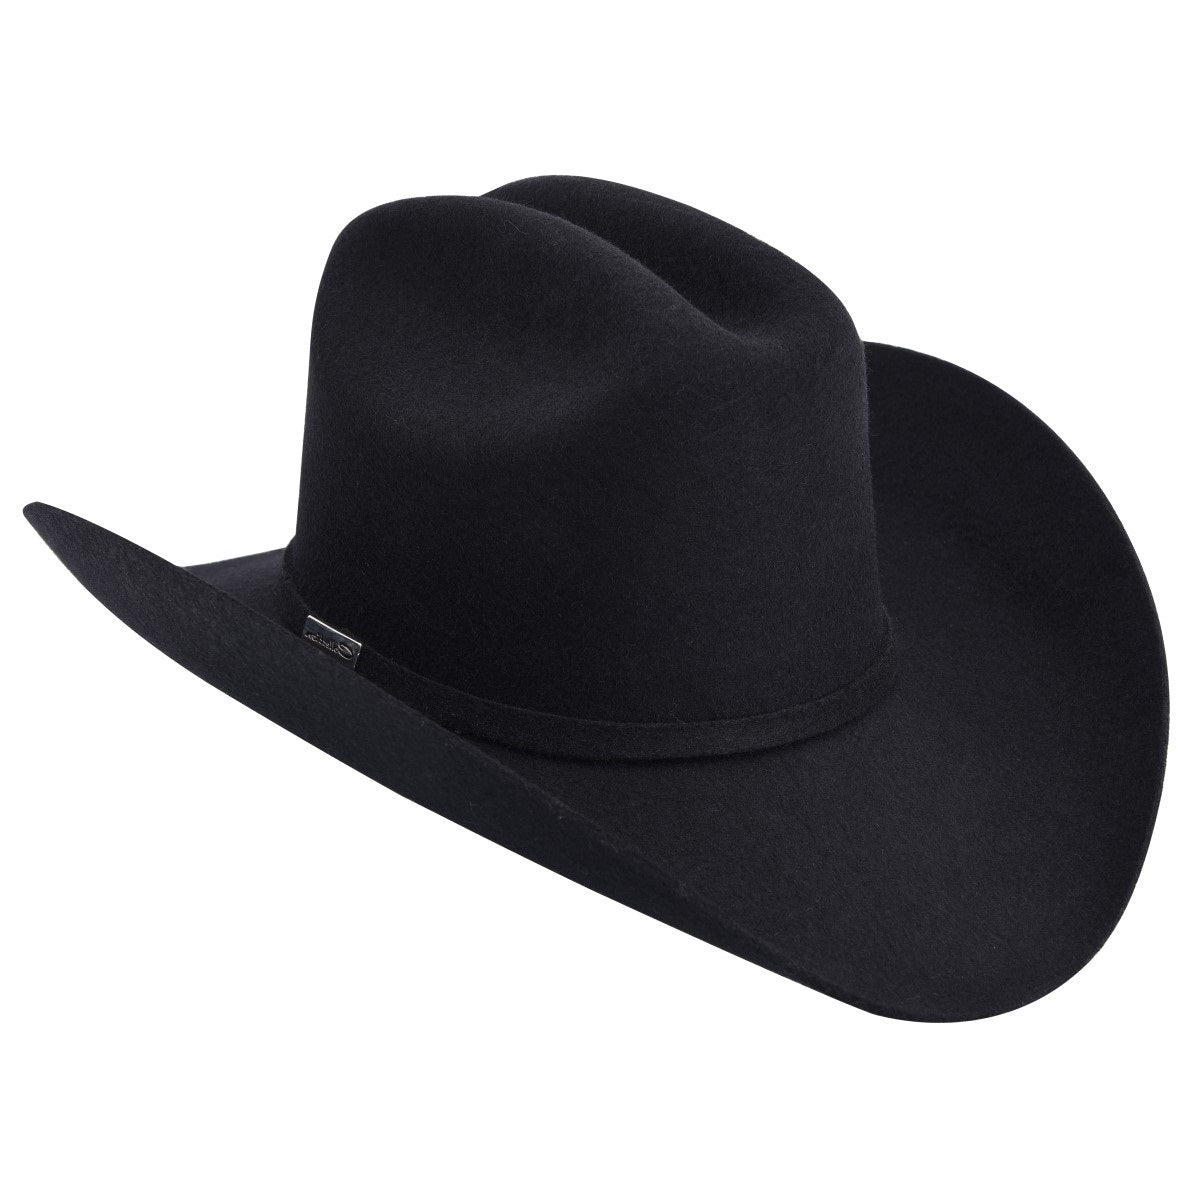 Sombreros Vaqueros / Western Hats – Nantli's - Online Store